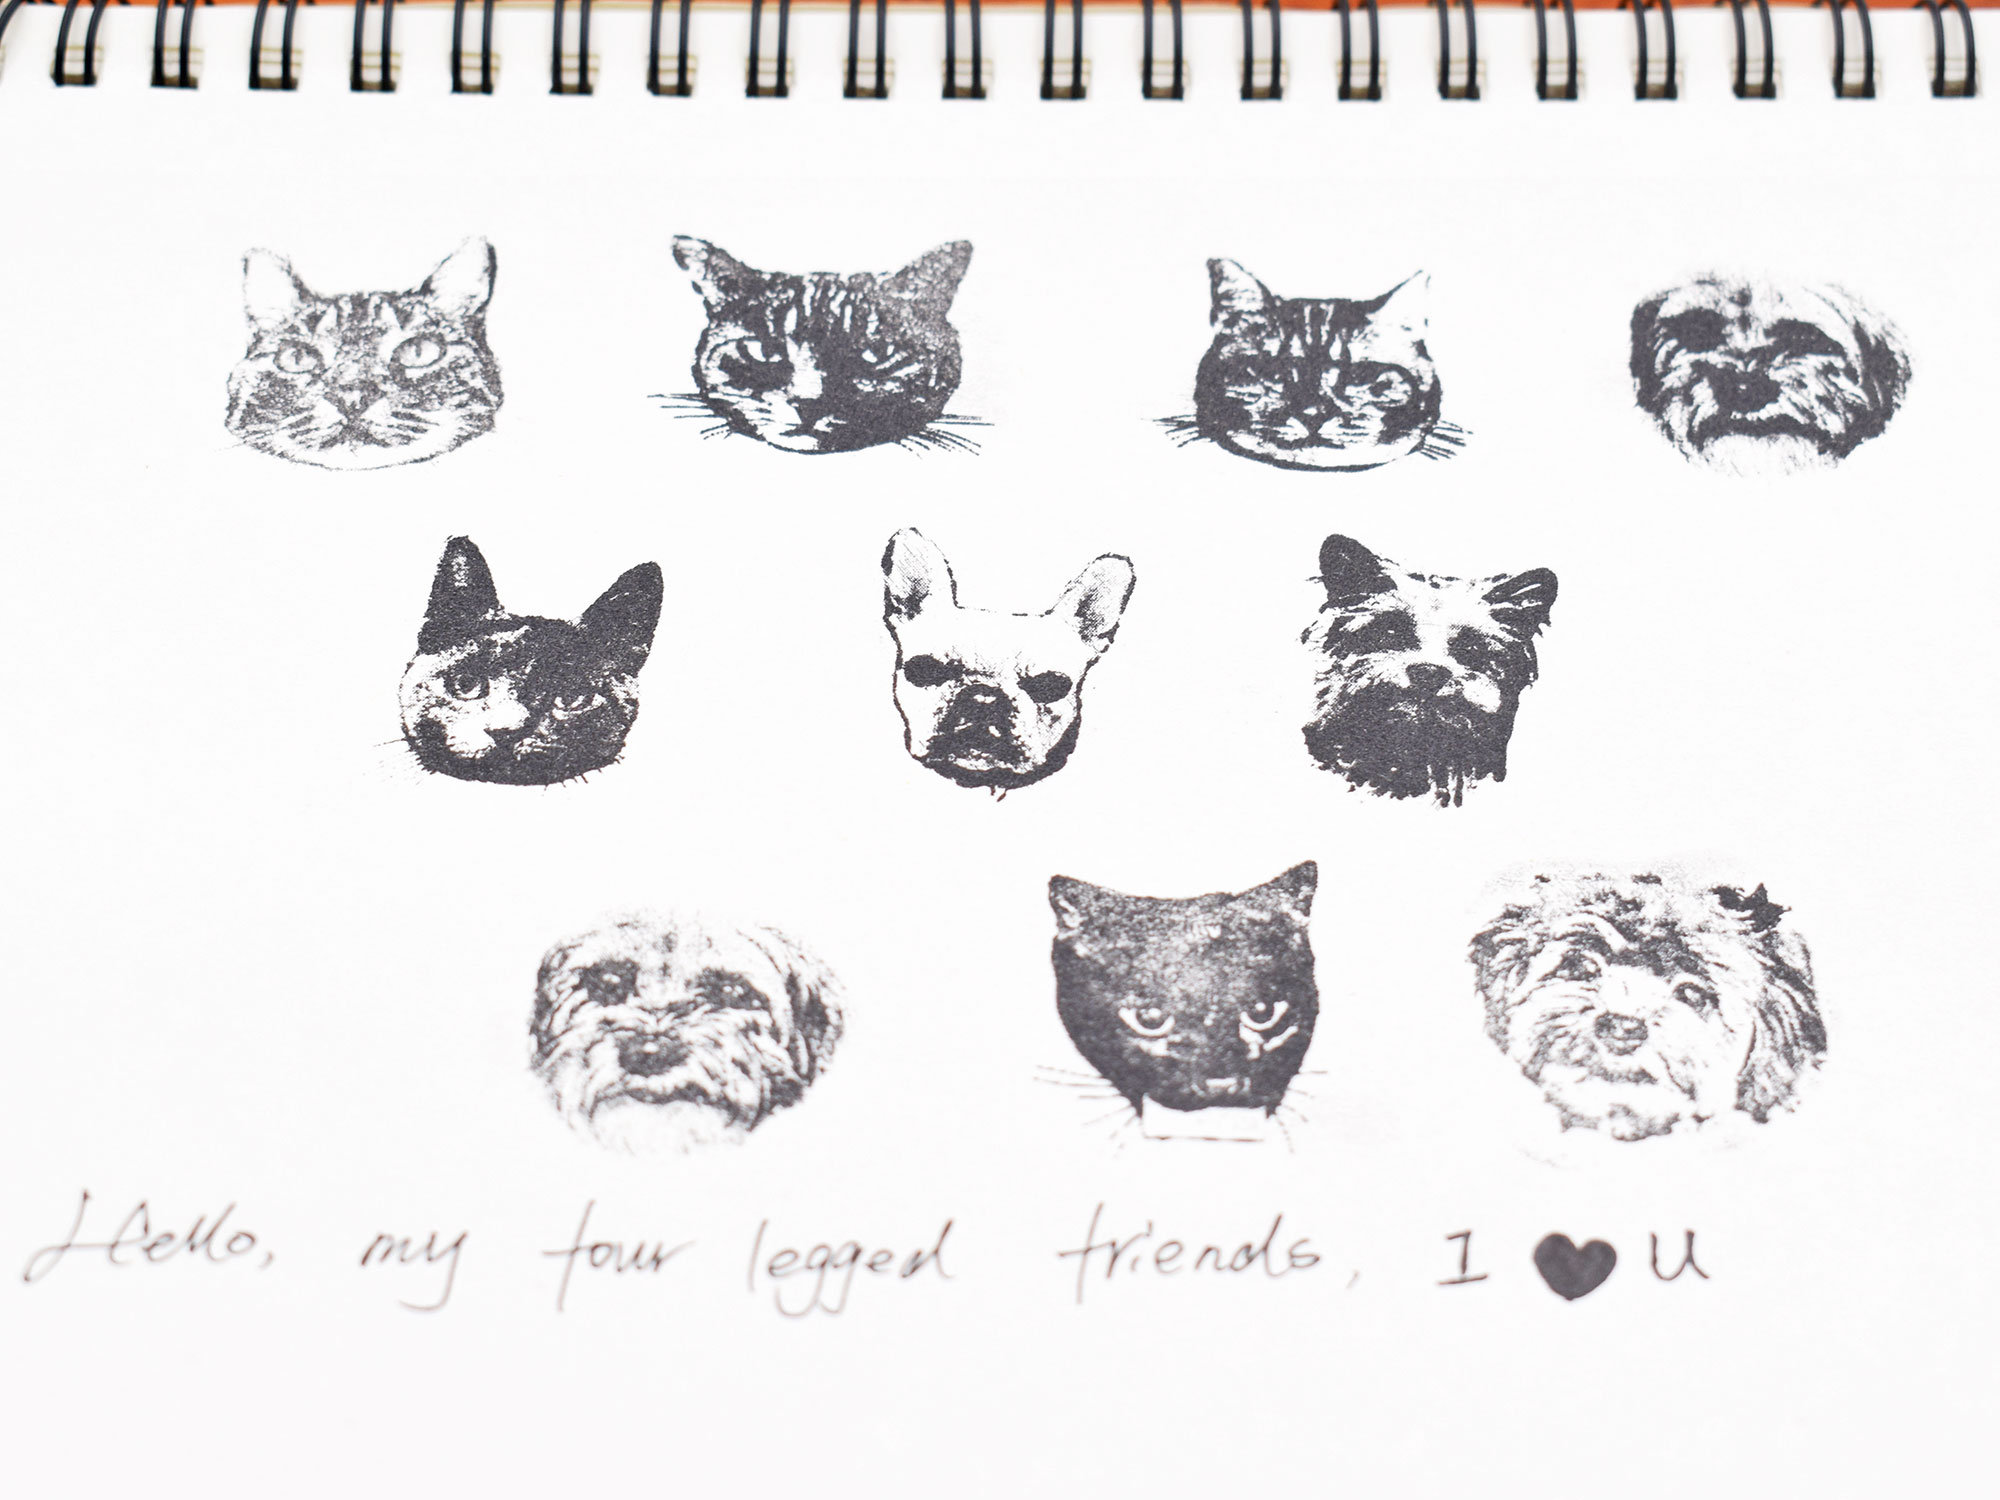 Custom-Made Personalized Cat Portrait Stamp – CatCurio Pet Store